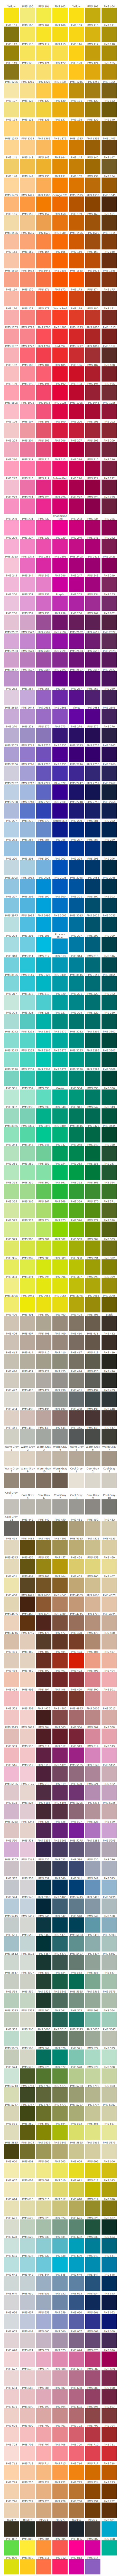 Enamel Pin Color Chart